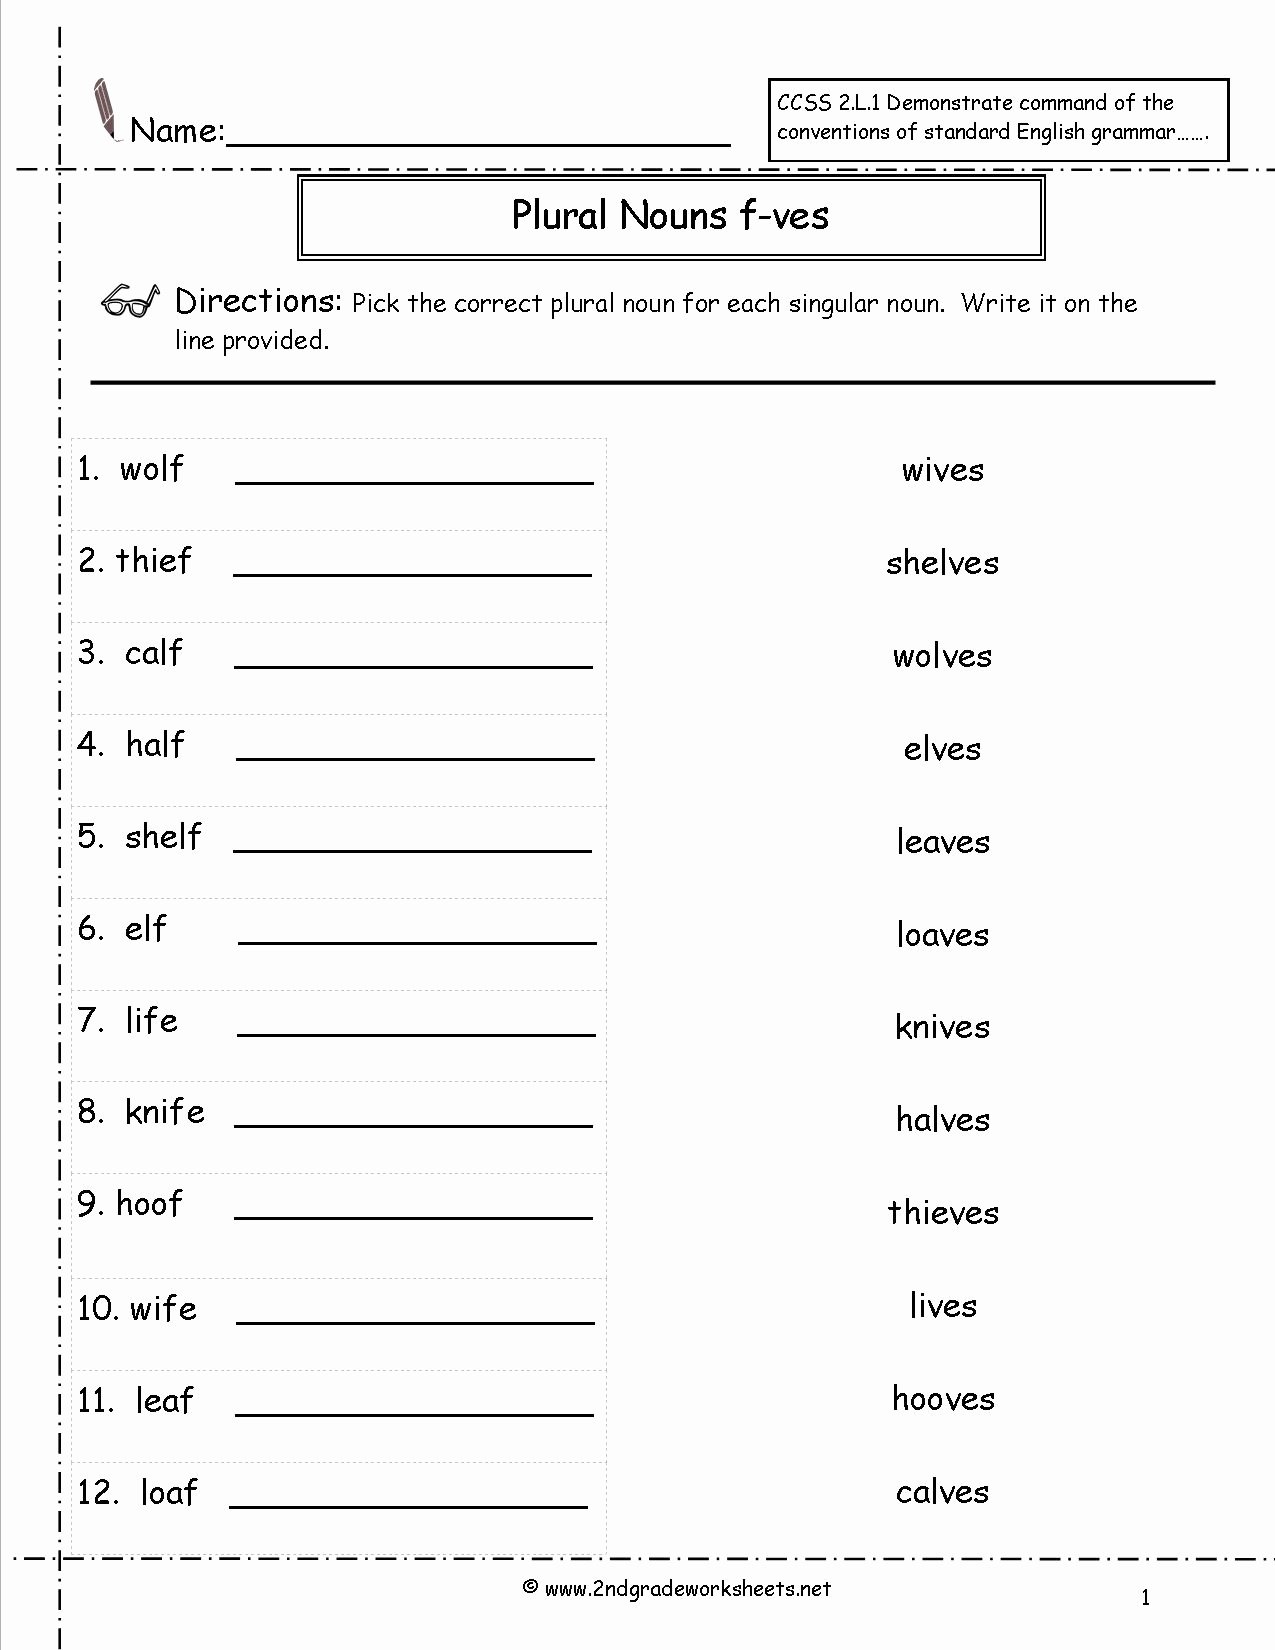 Singular and Plural Nouns Worksheet Luxury Singular and Plural Nouns Worksheets